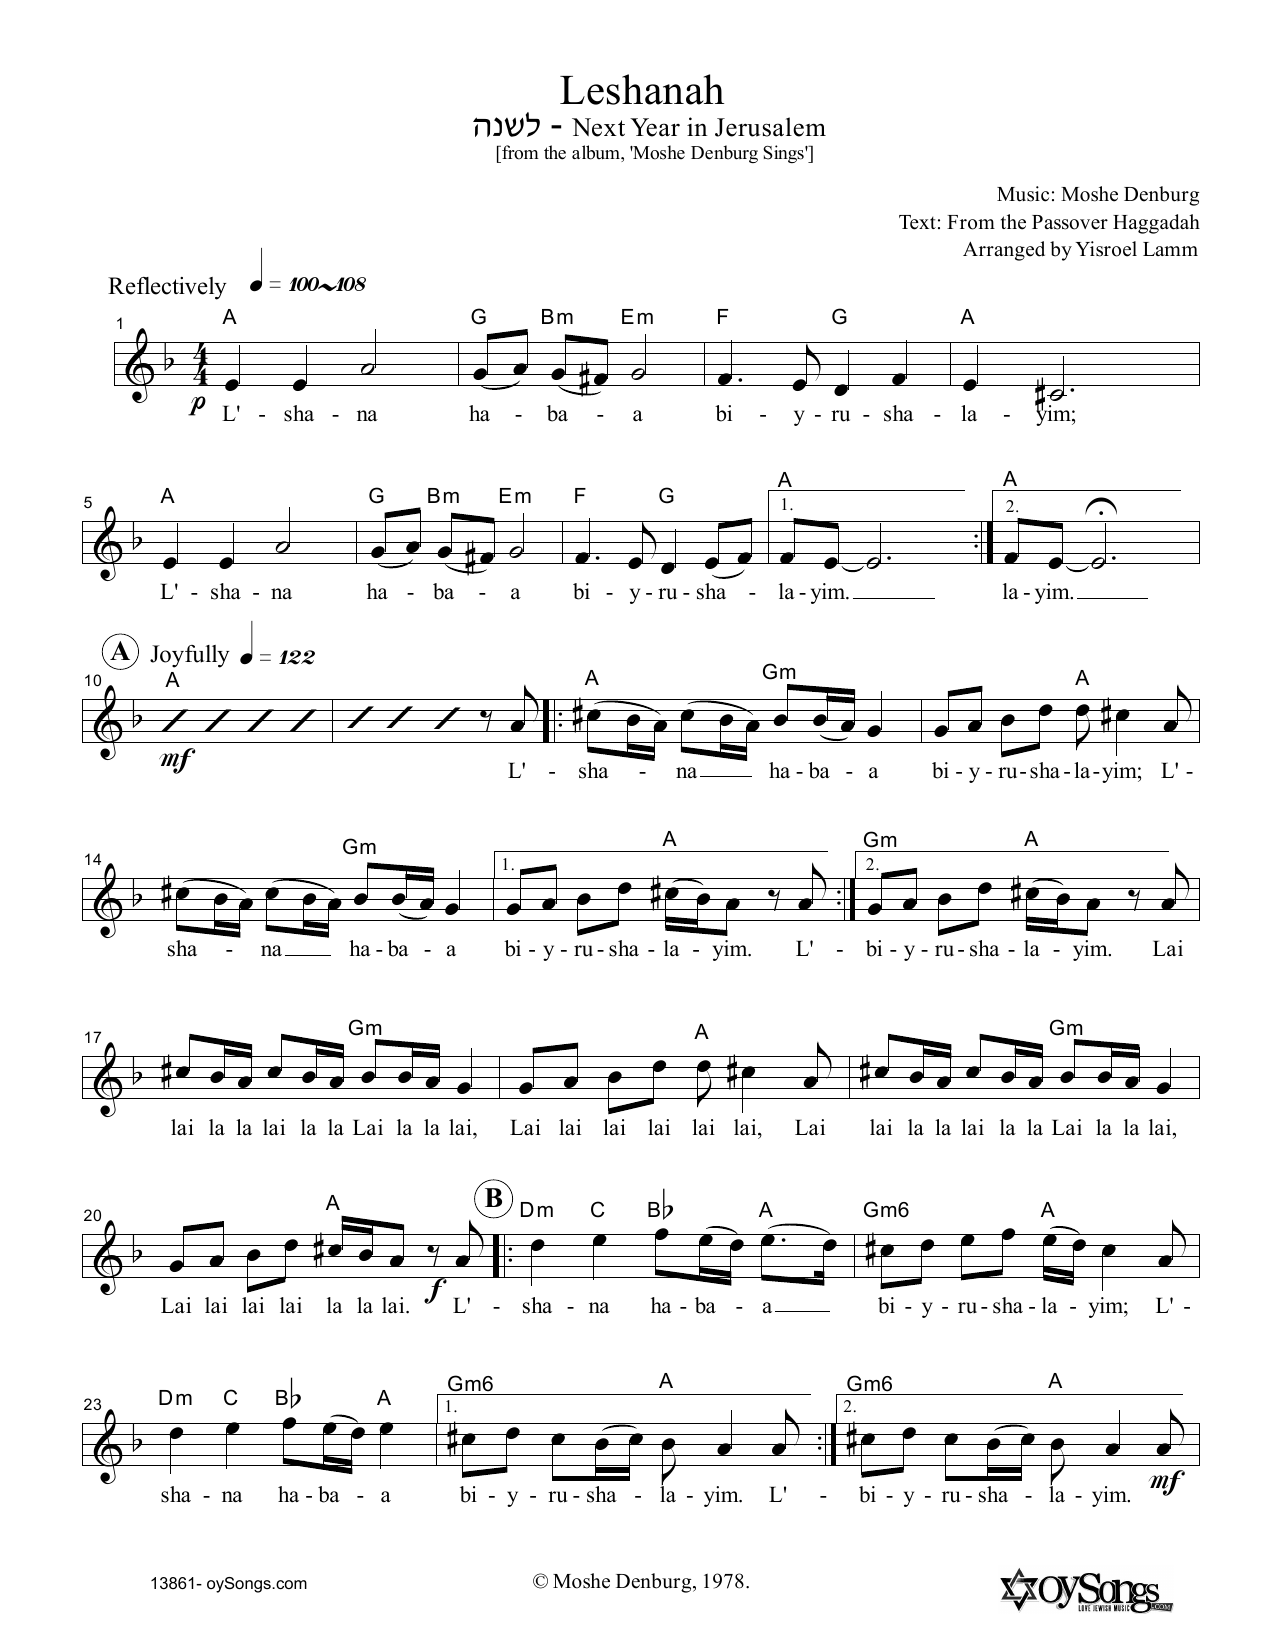 Moshe Denburg Leshanah Sheet Music Notes & Chords for Melody Line, Lyrics & Chords - Download or Print PDF